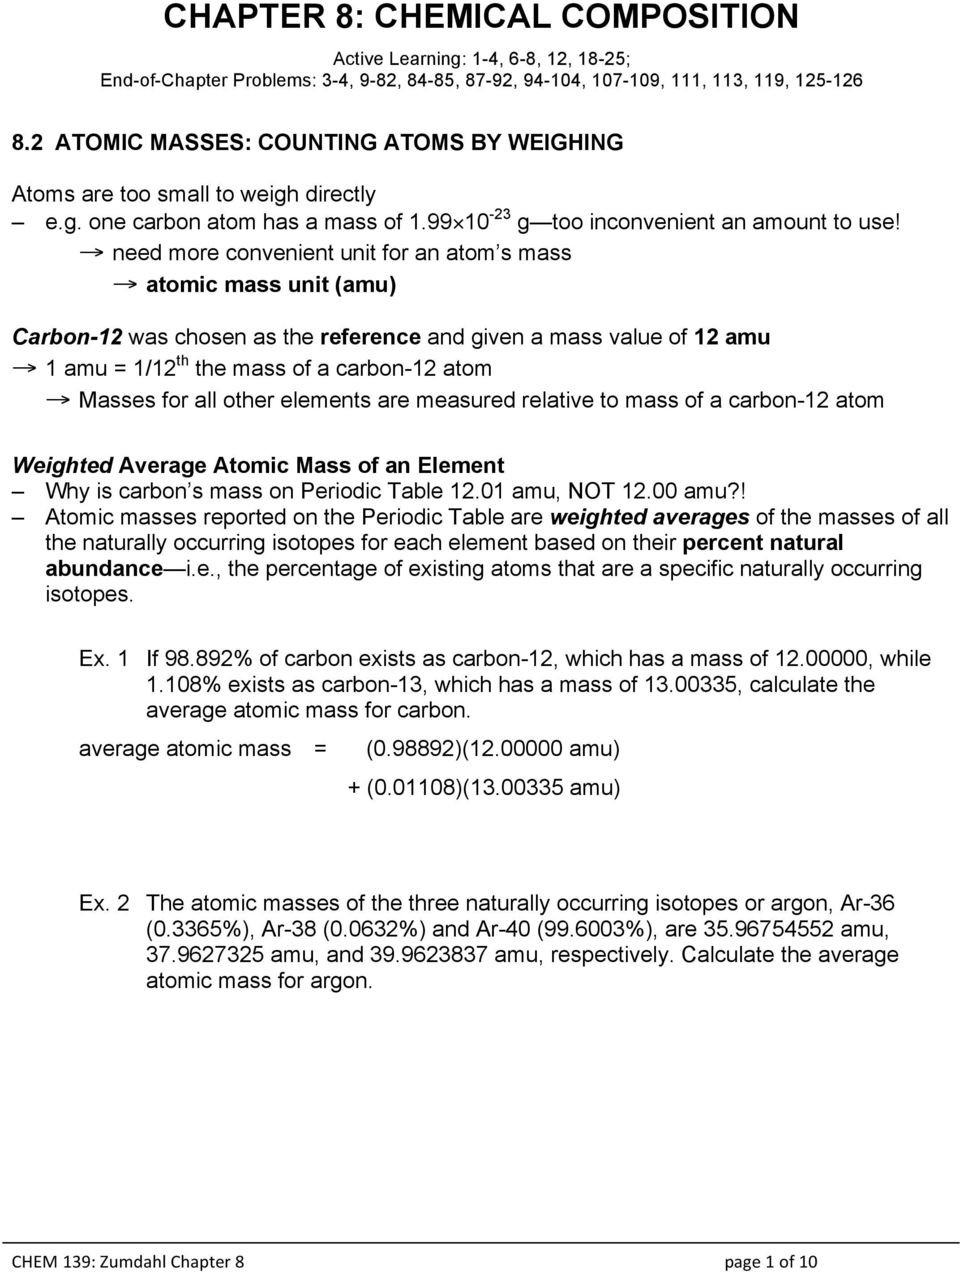 Average atomic Mass Worksheet Chapter 8 Chemical Position Pdf Free Download